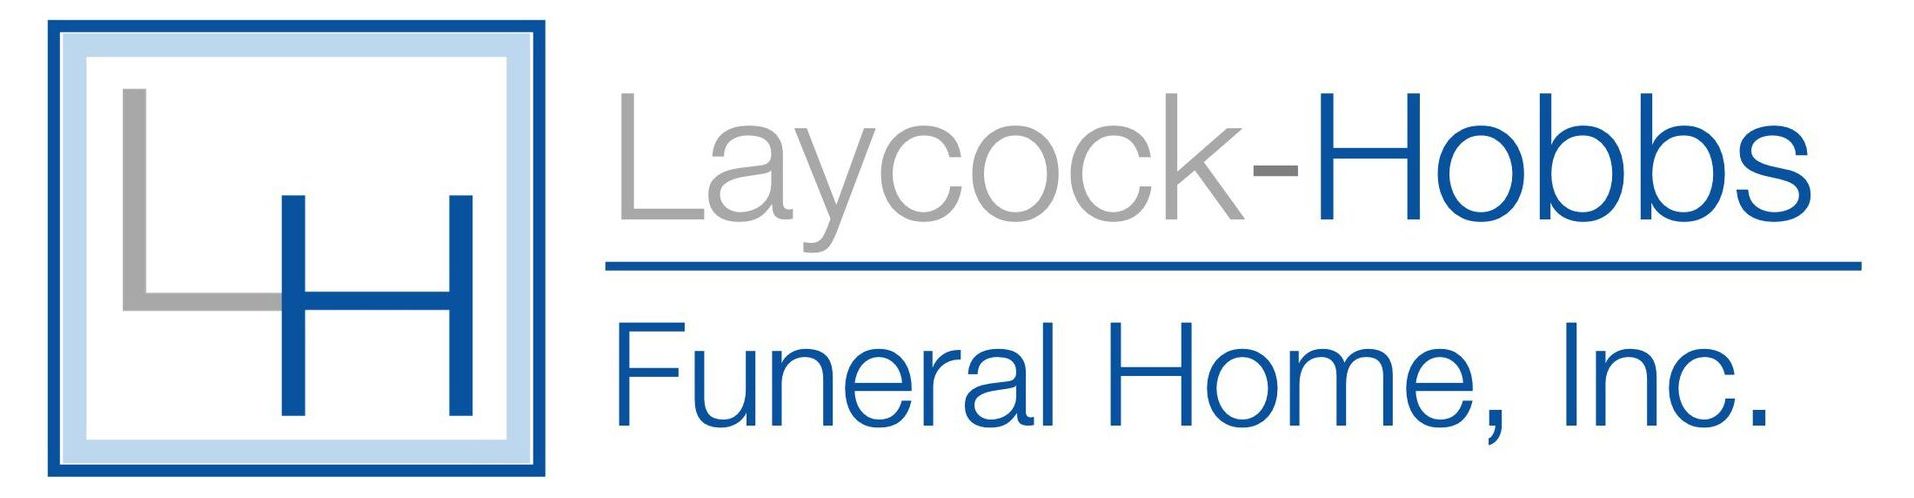 Laycock-Hobbs Funeral Home, Inc Logo